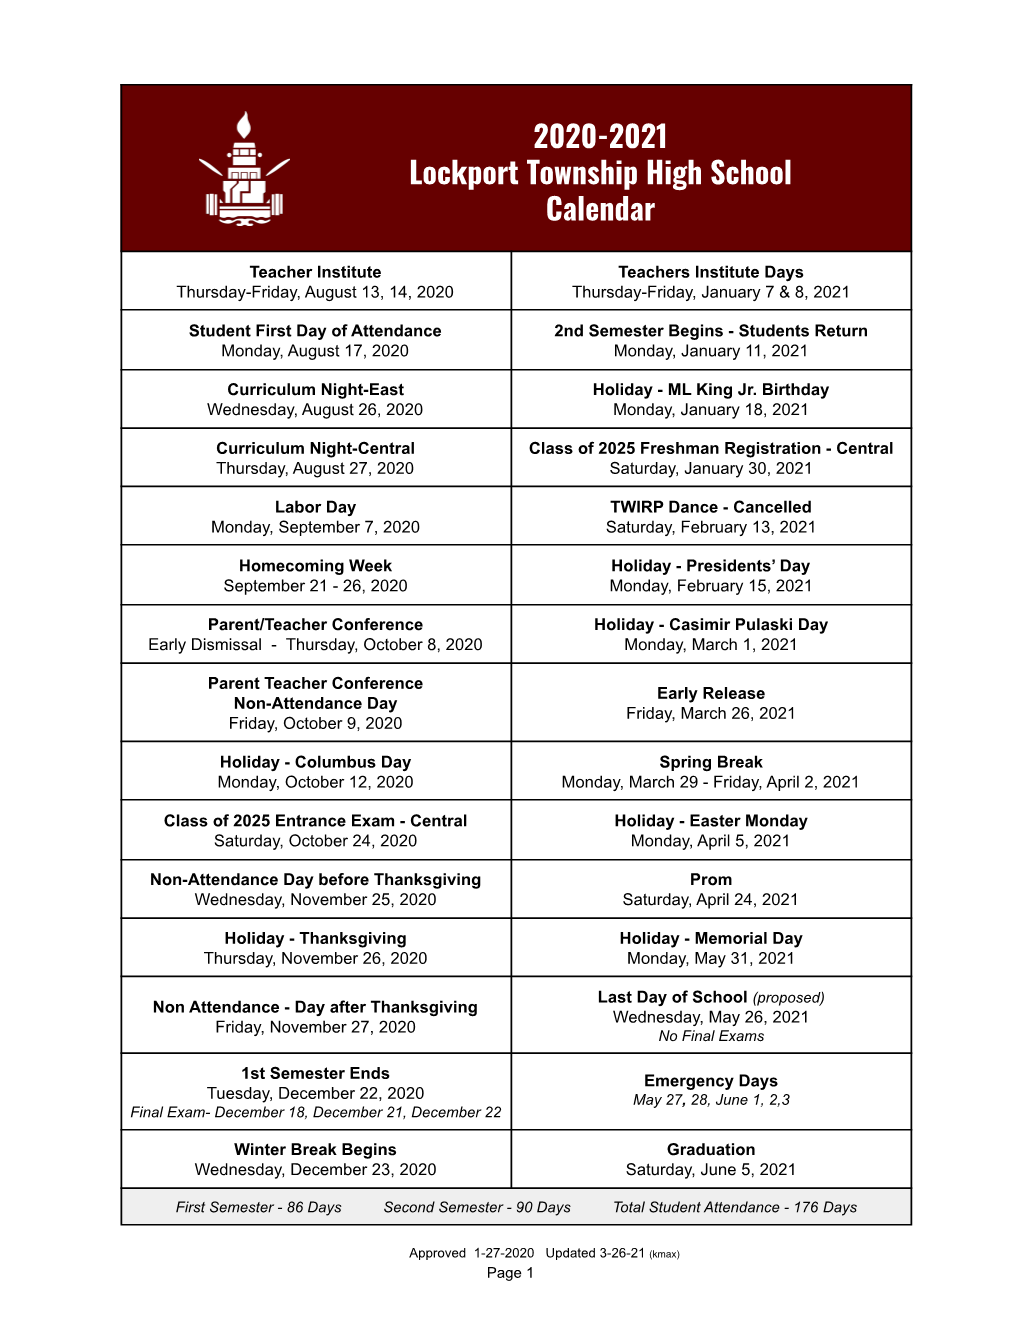 2020-2021 Lockport Township High School Calendar